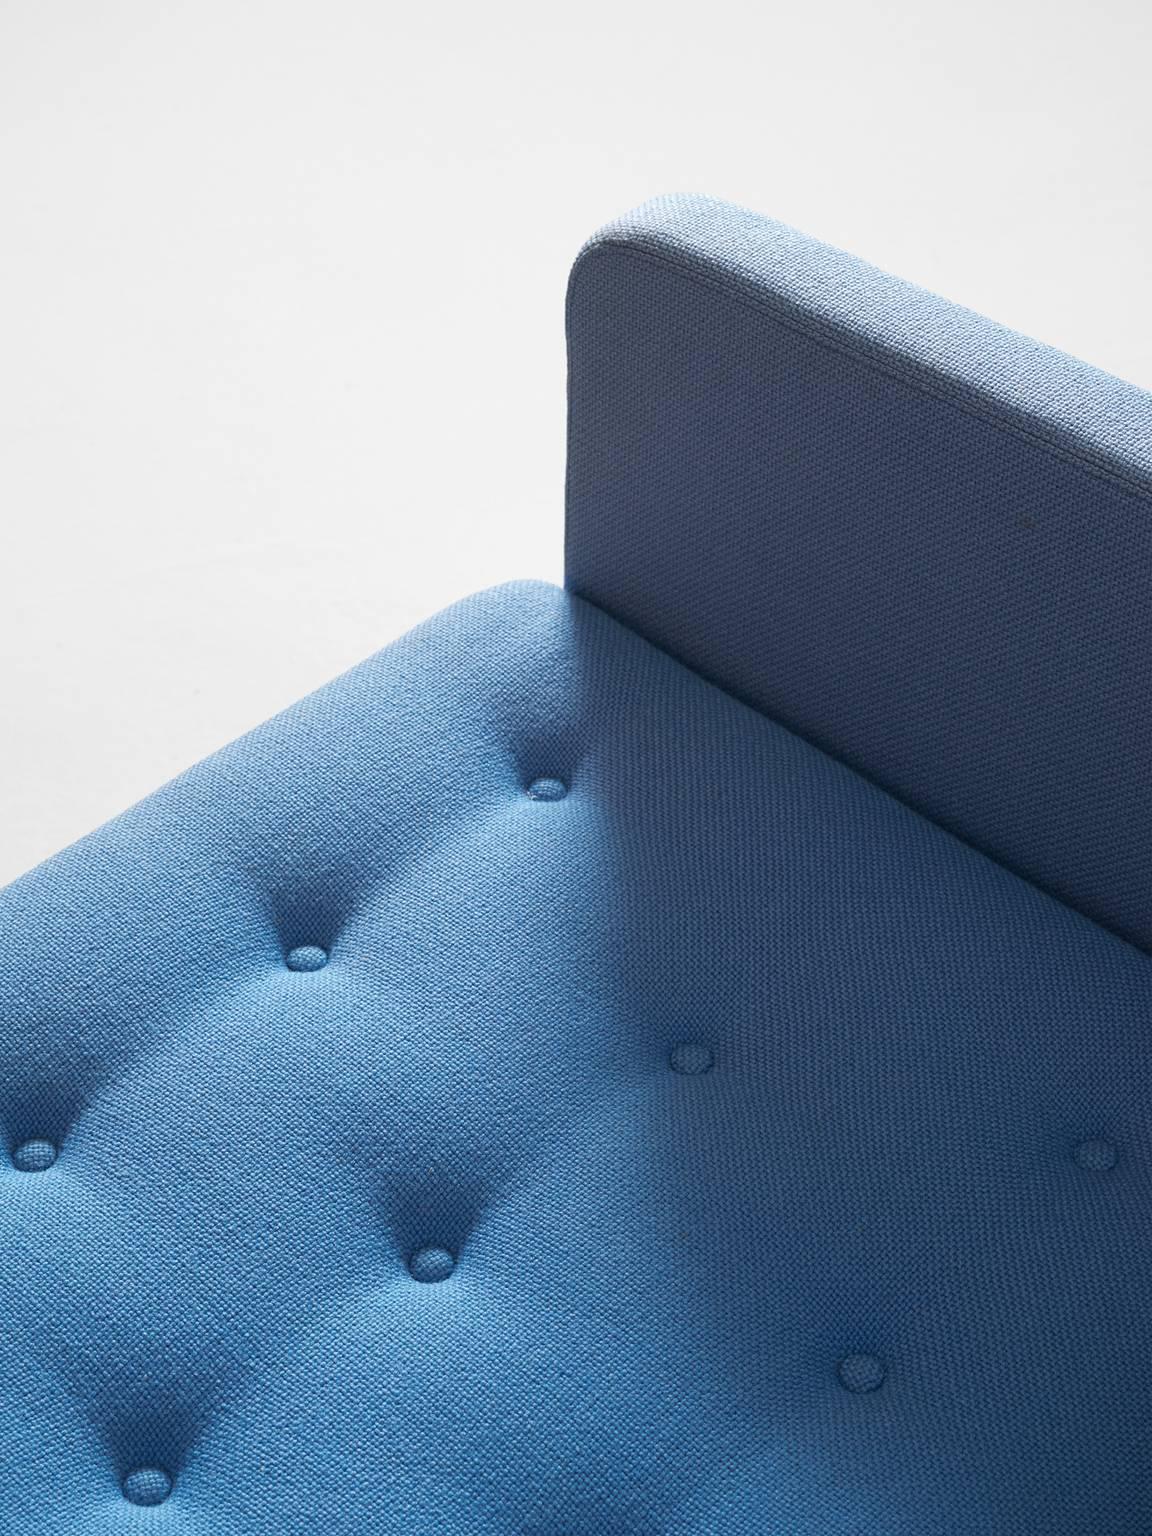 Late 20th Century Erik Jørgensen Lounge Chair in Light Blue Fabric Upholstery